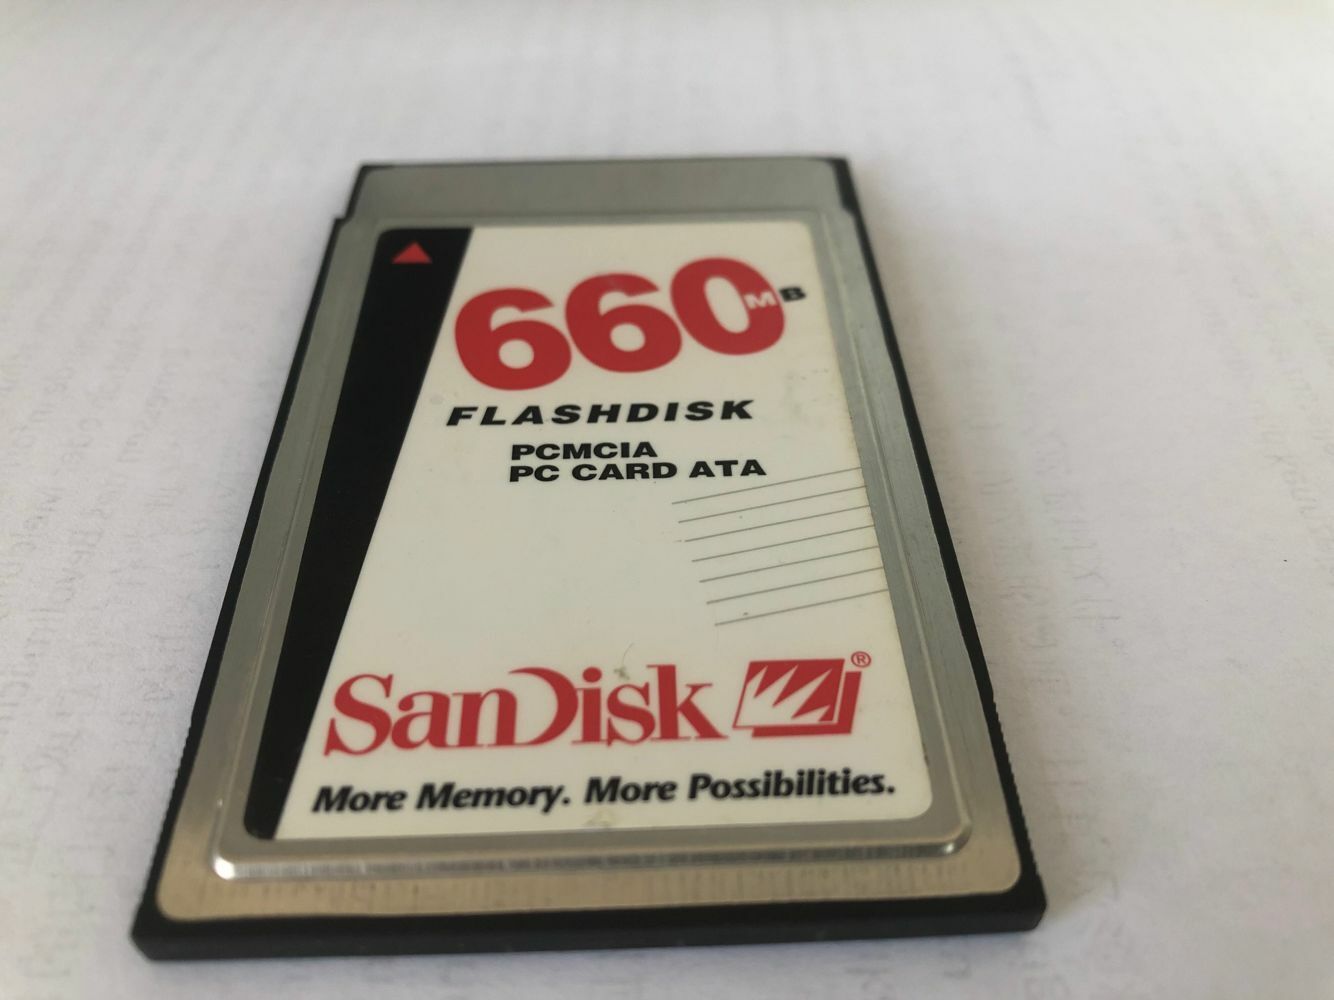 SANDISK 660MB FLASHDISK PC CARD ATA